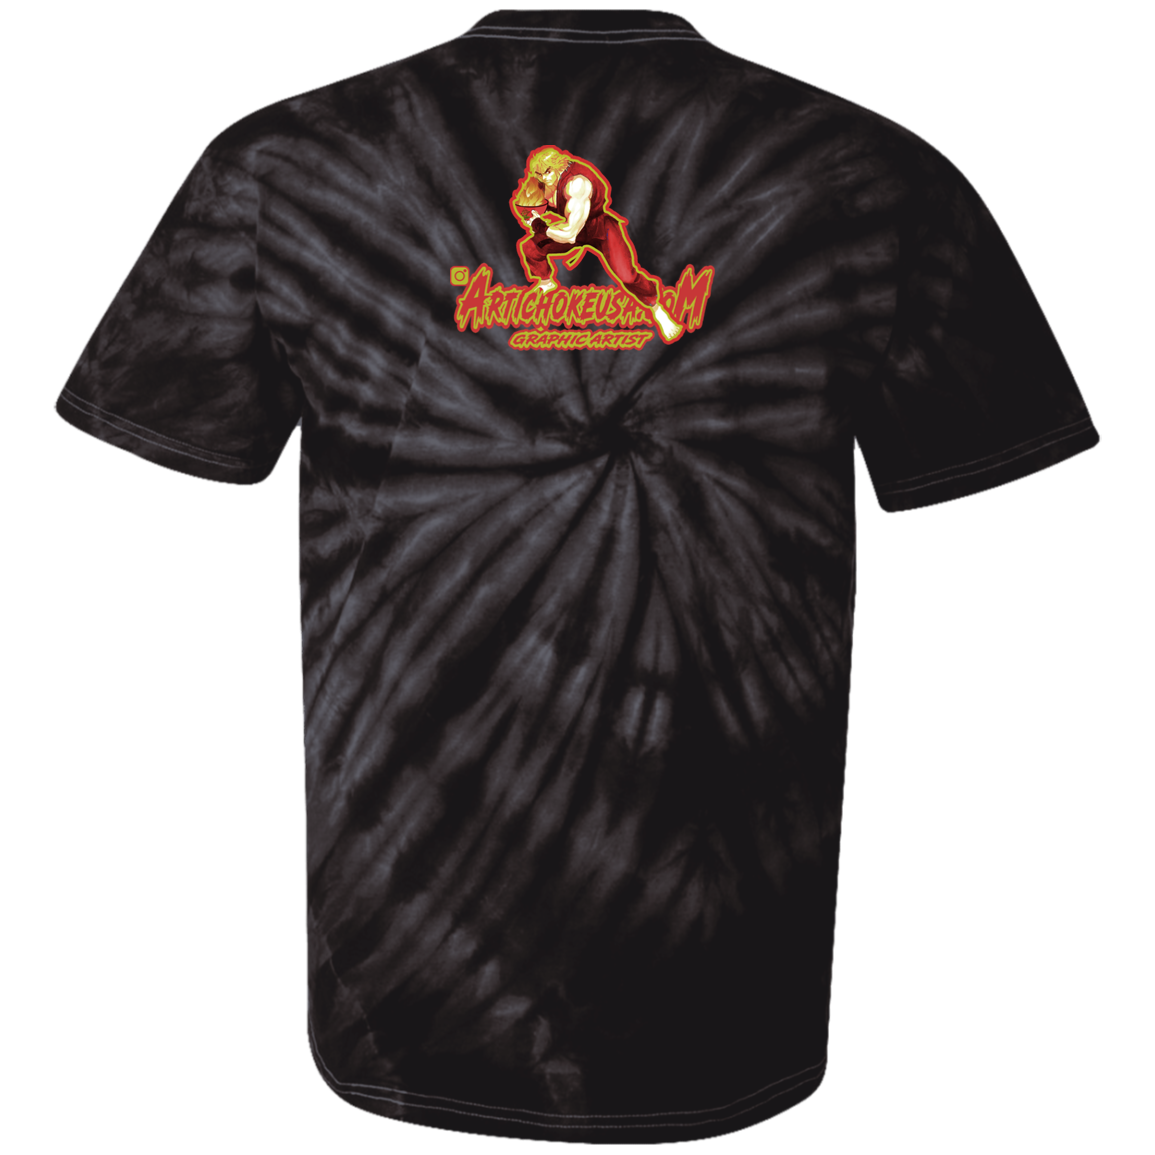 ArtichokeUSA Custom Design. Pho Ken Artichoke. Street Fighter Parody. Gaming. Youth Tie Dye T-Shirt